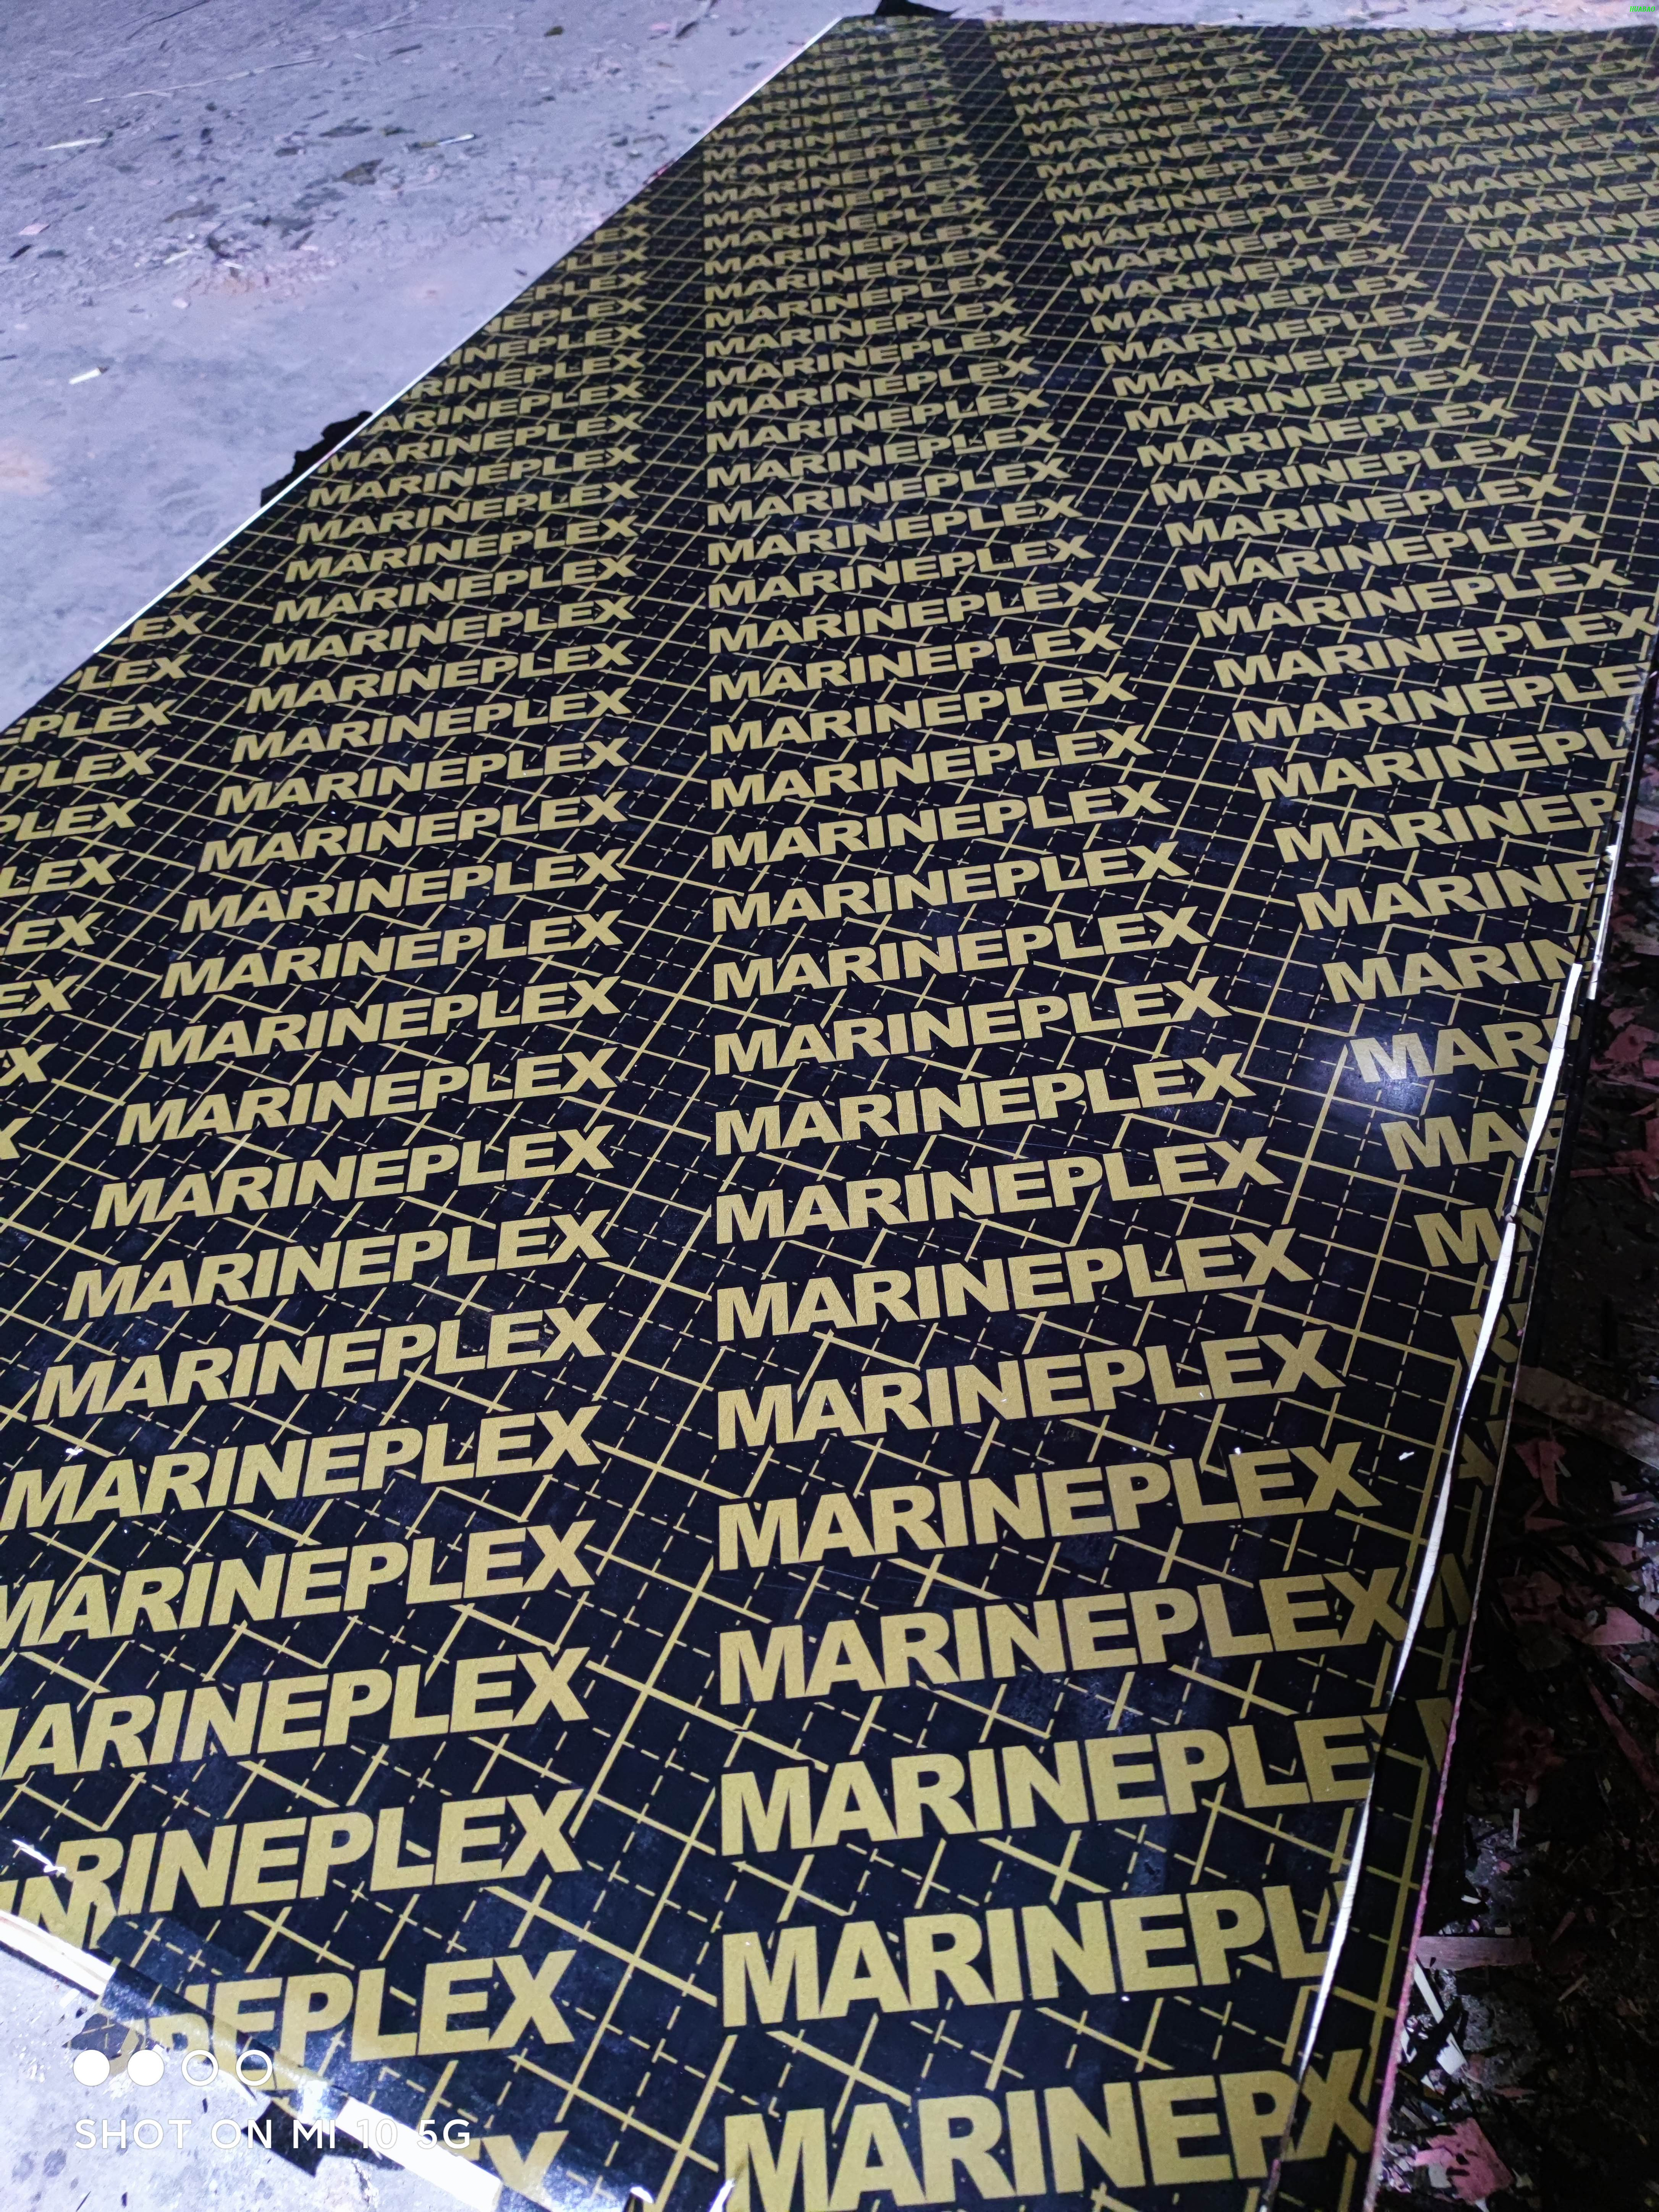 18mm Marineplex Film Faced Plywood Poplar Core for Middel-East Markets